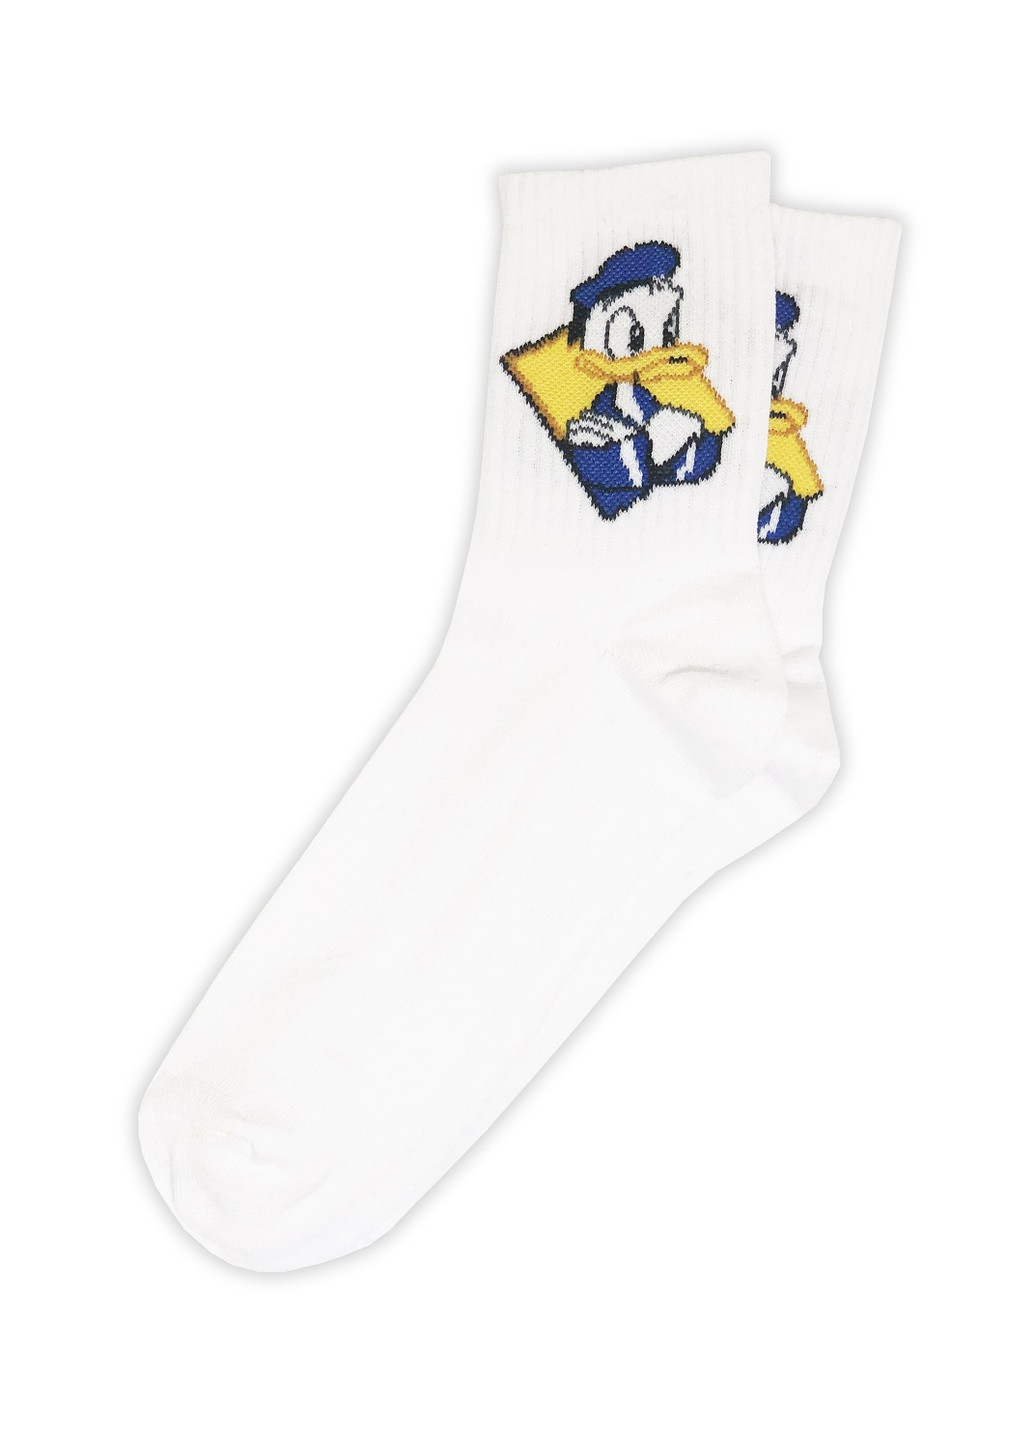 Шкарпетки Дональд Дак Rock'n'socks высокие (211258815)